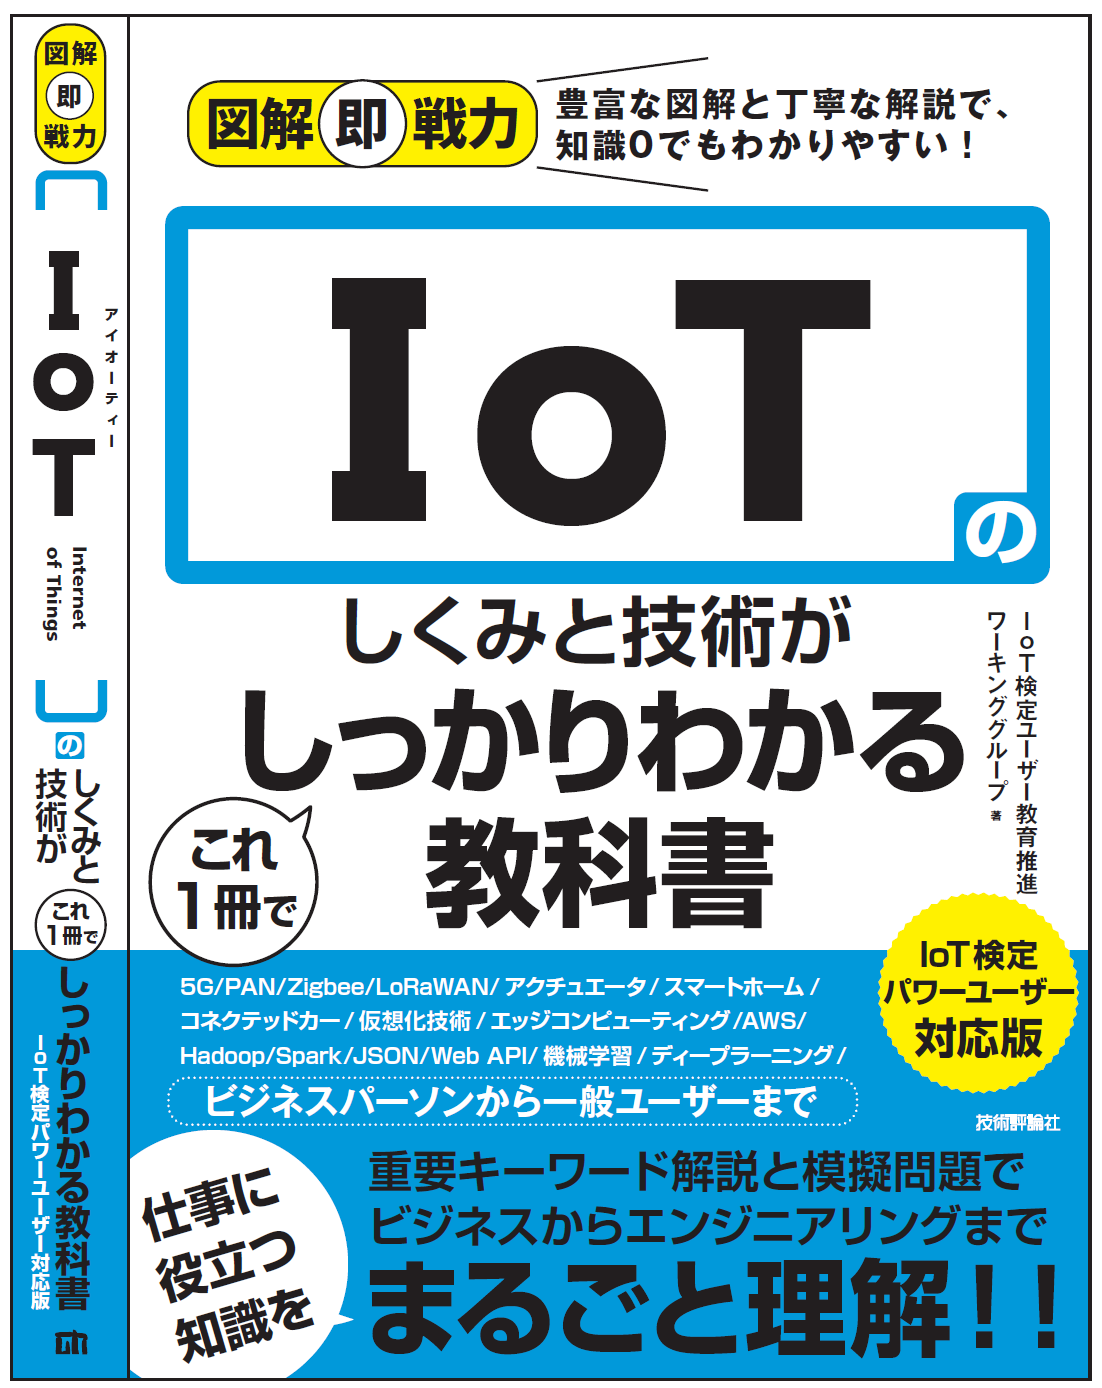 IoT検定とユーザー向け書籍紹介